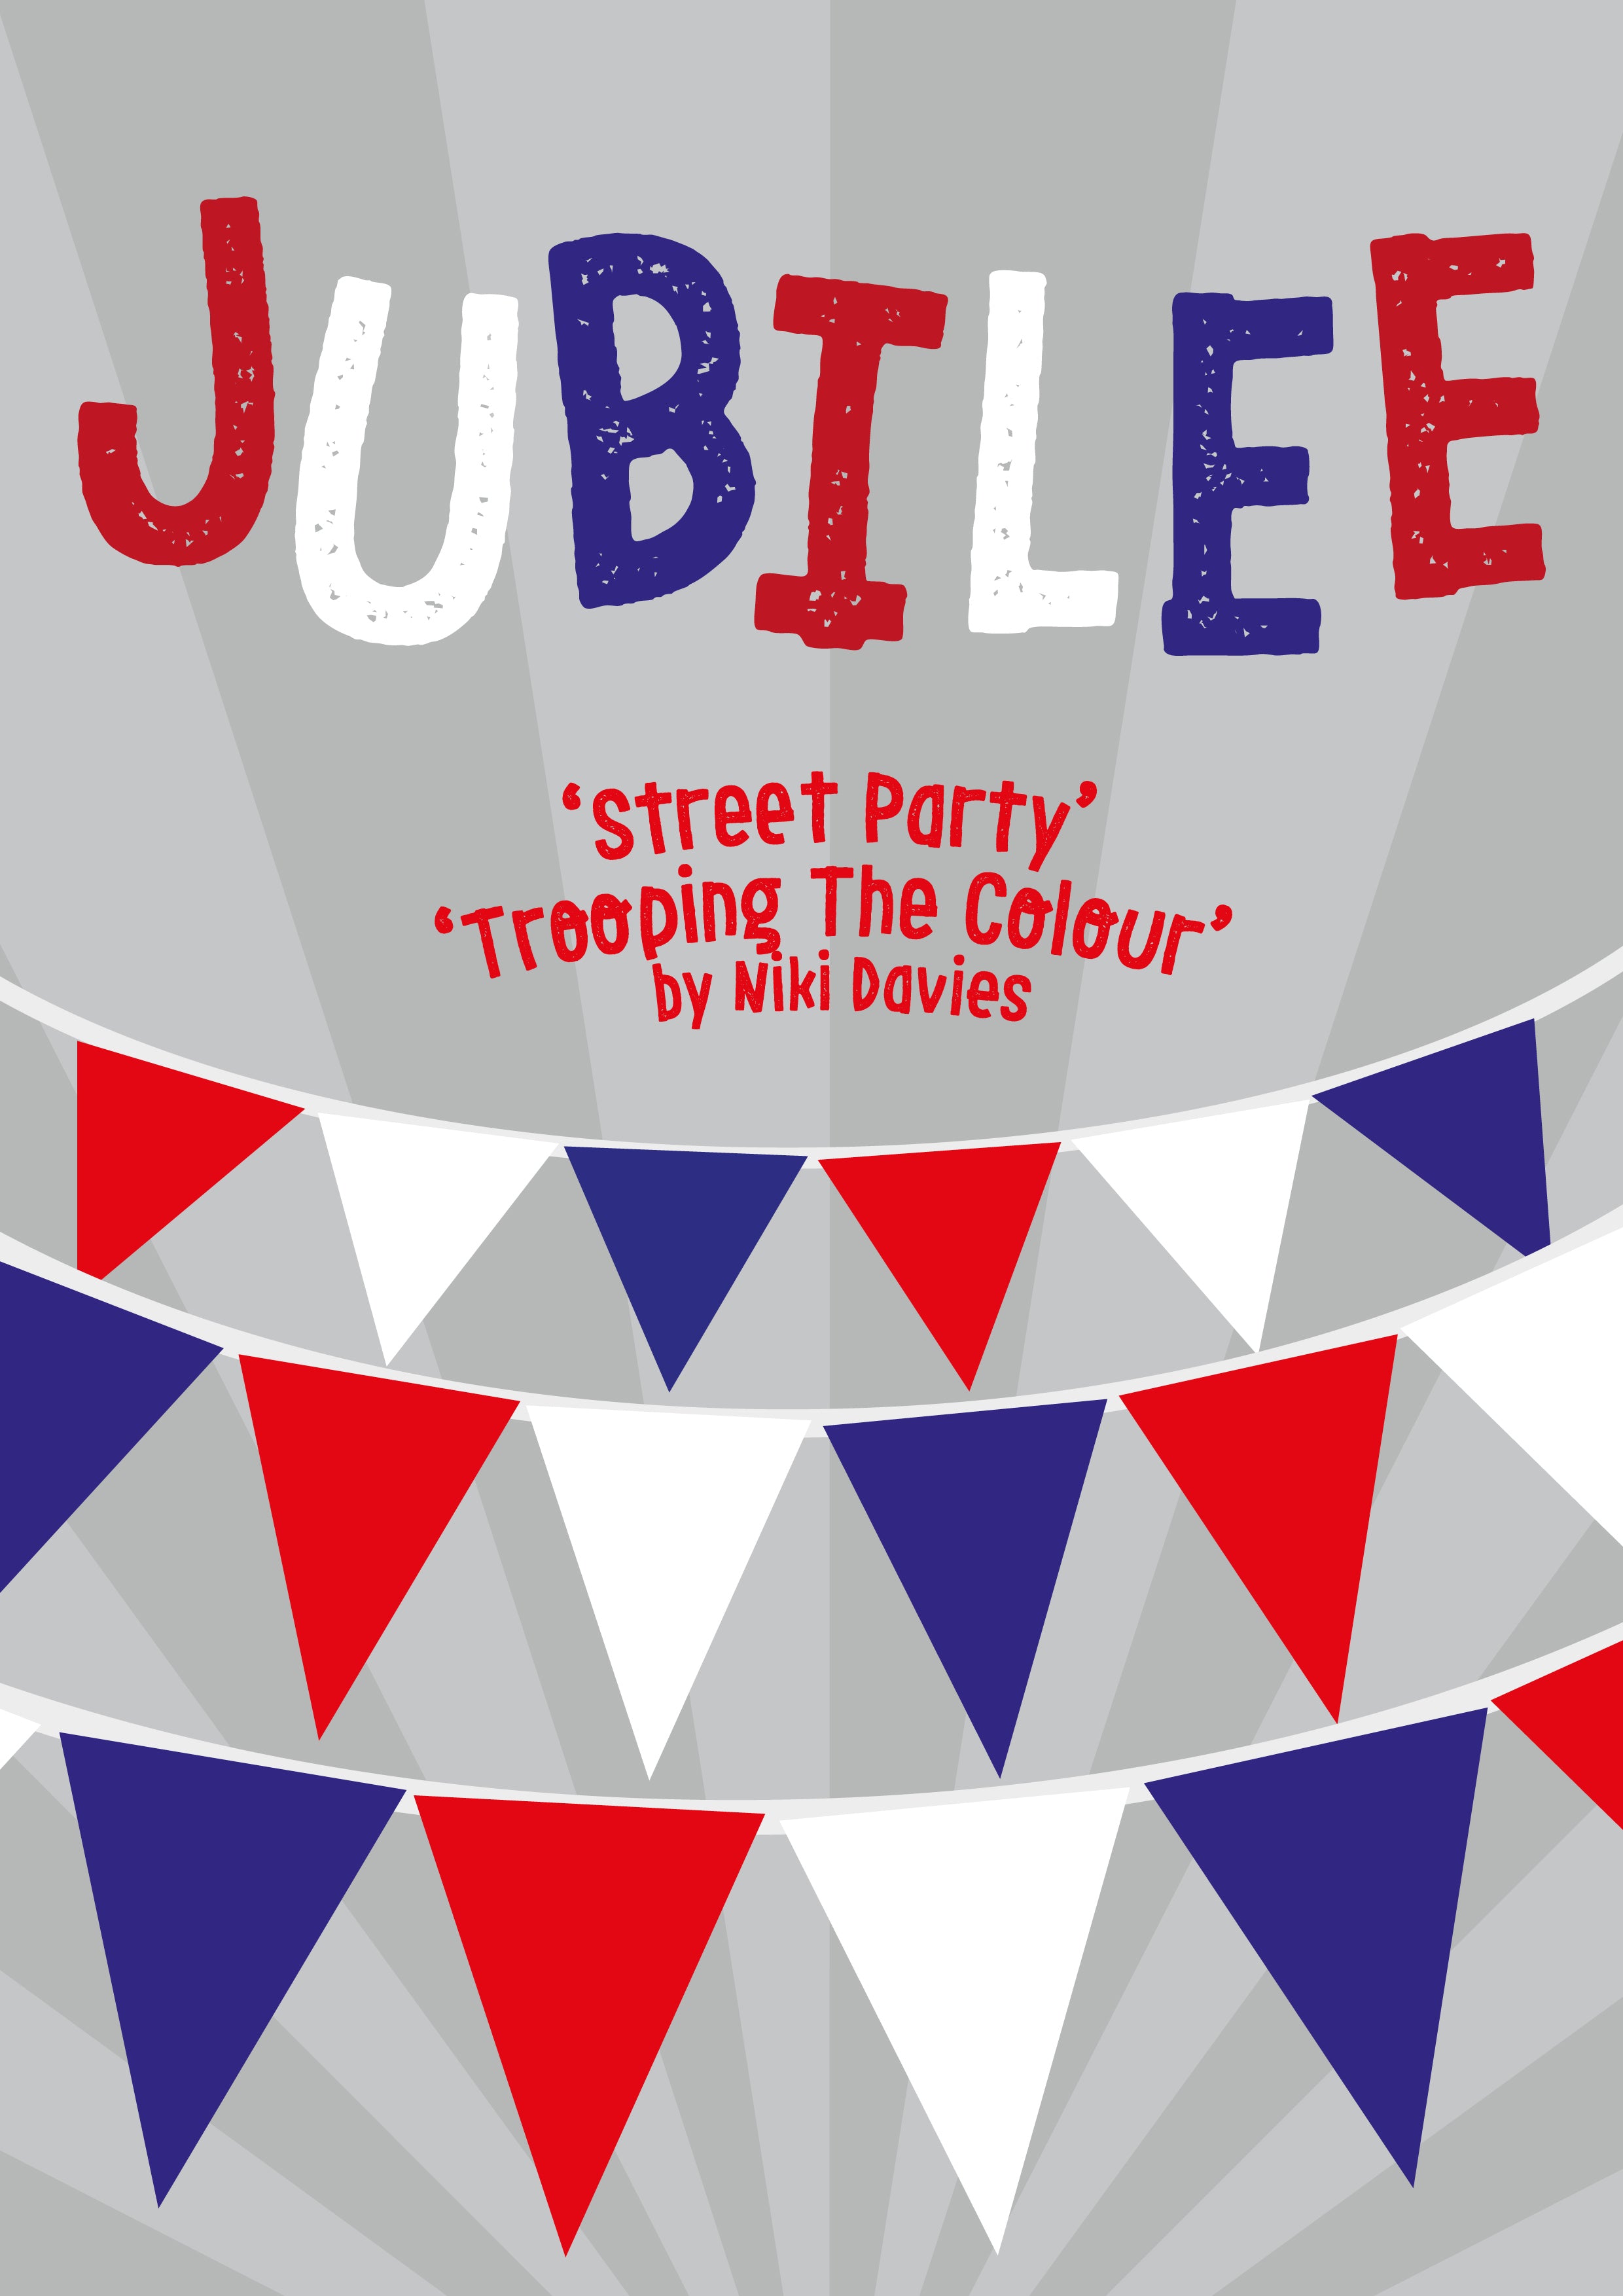 Platinum Jubilee Songs Download Pack - 100% Discount With Code JUBILEE100